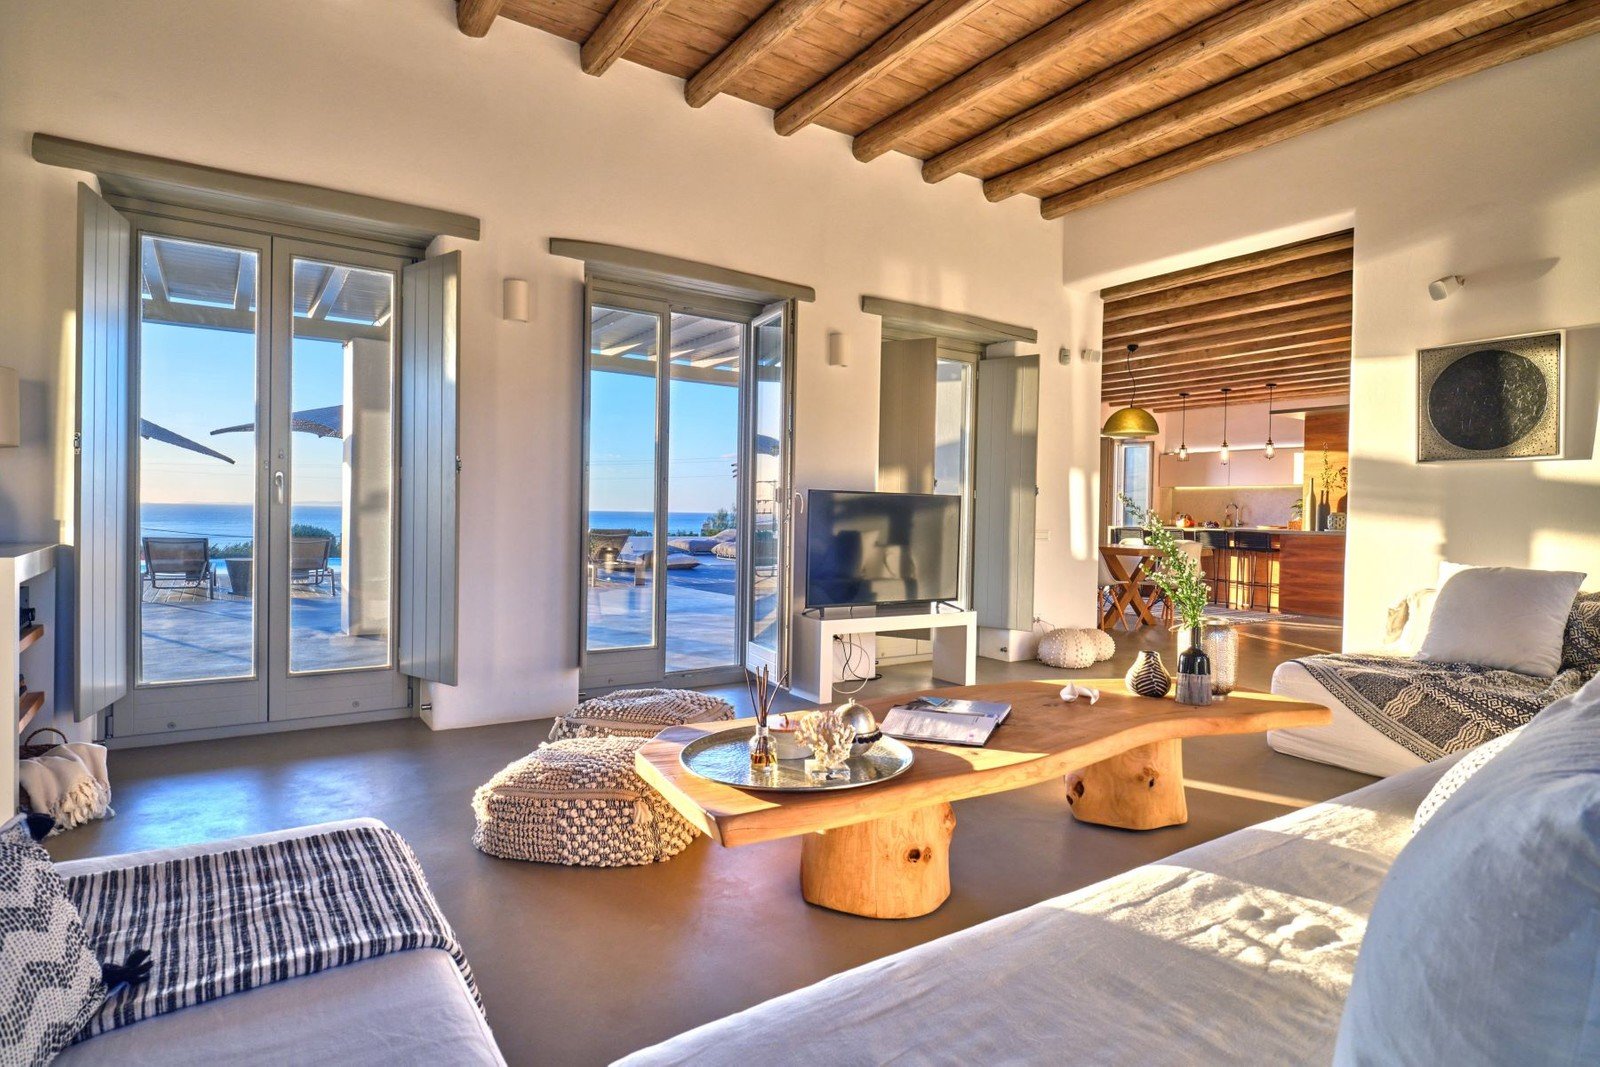 Francis York Luxury Villa in Paros, Greece Eligible For Greek Golden Visa Program 14.jpeg